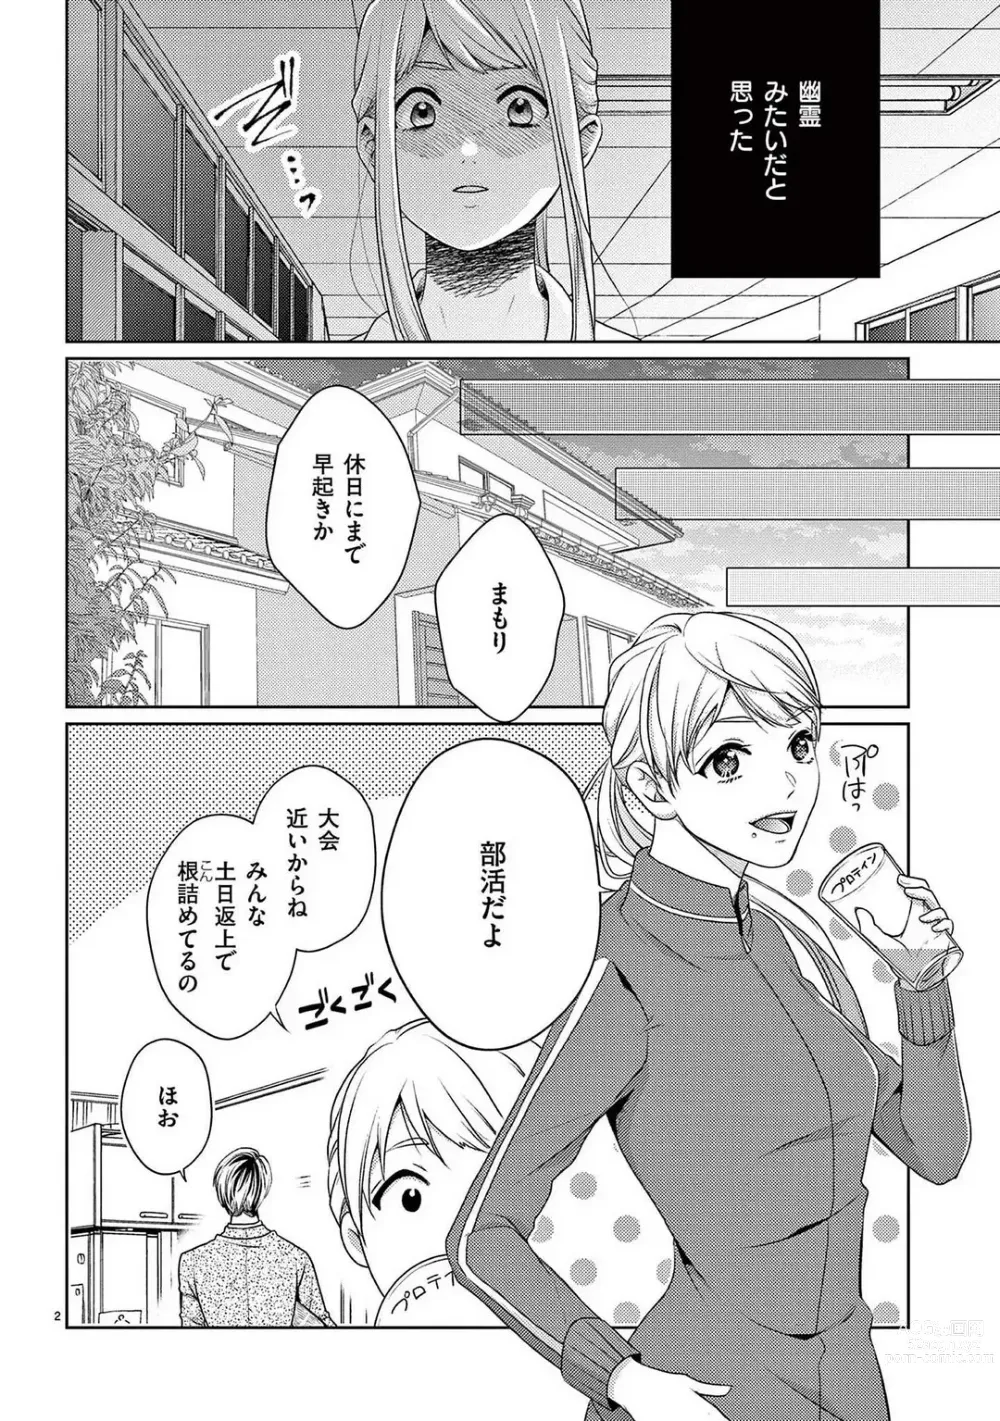 Page 3 of manga Sono Ase, Sekkusu Pafuyūmu. 〜 Sutte, Kisushite, Musabotte~Chp.1-7